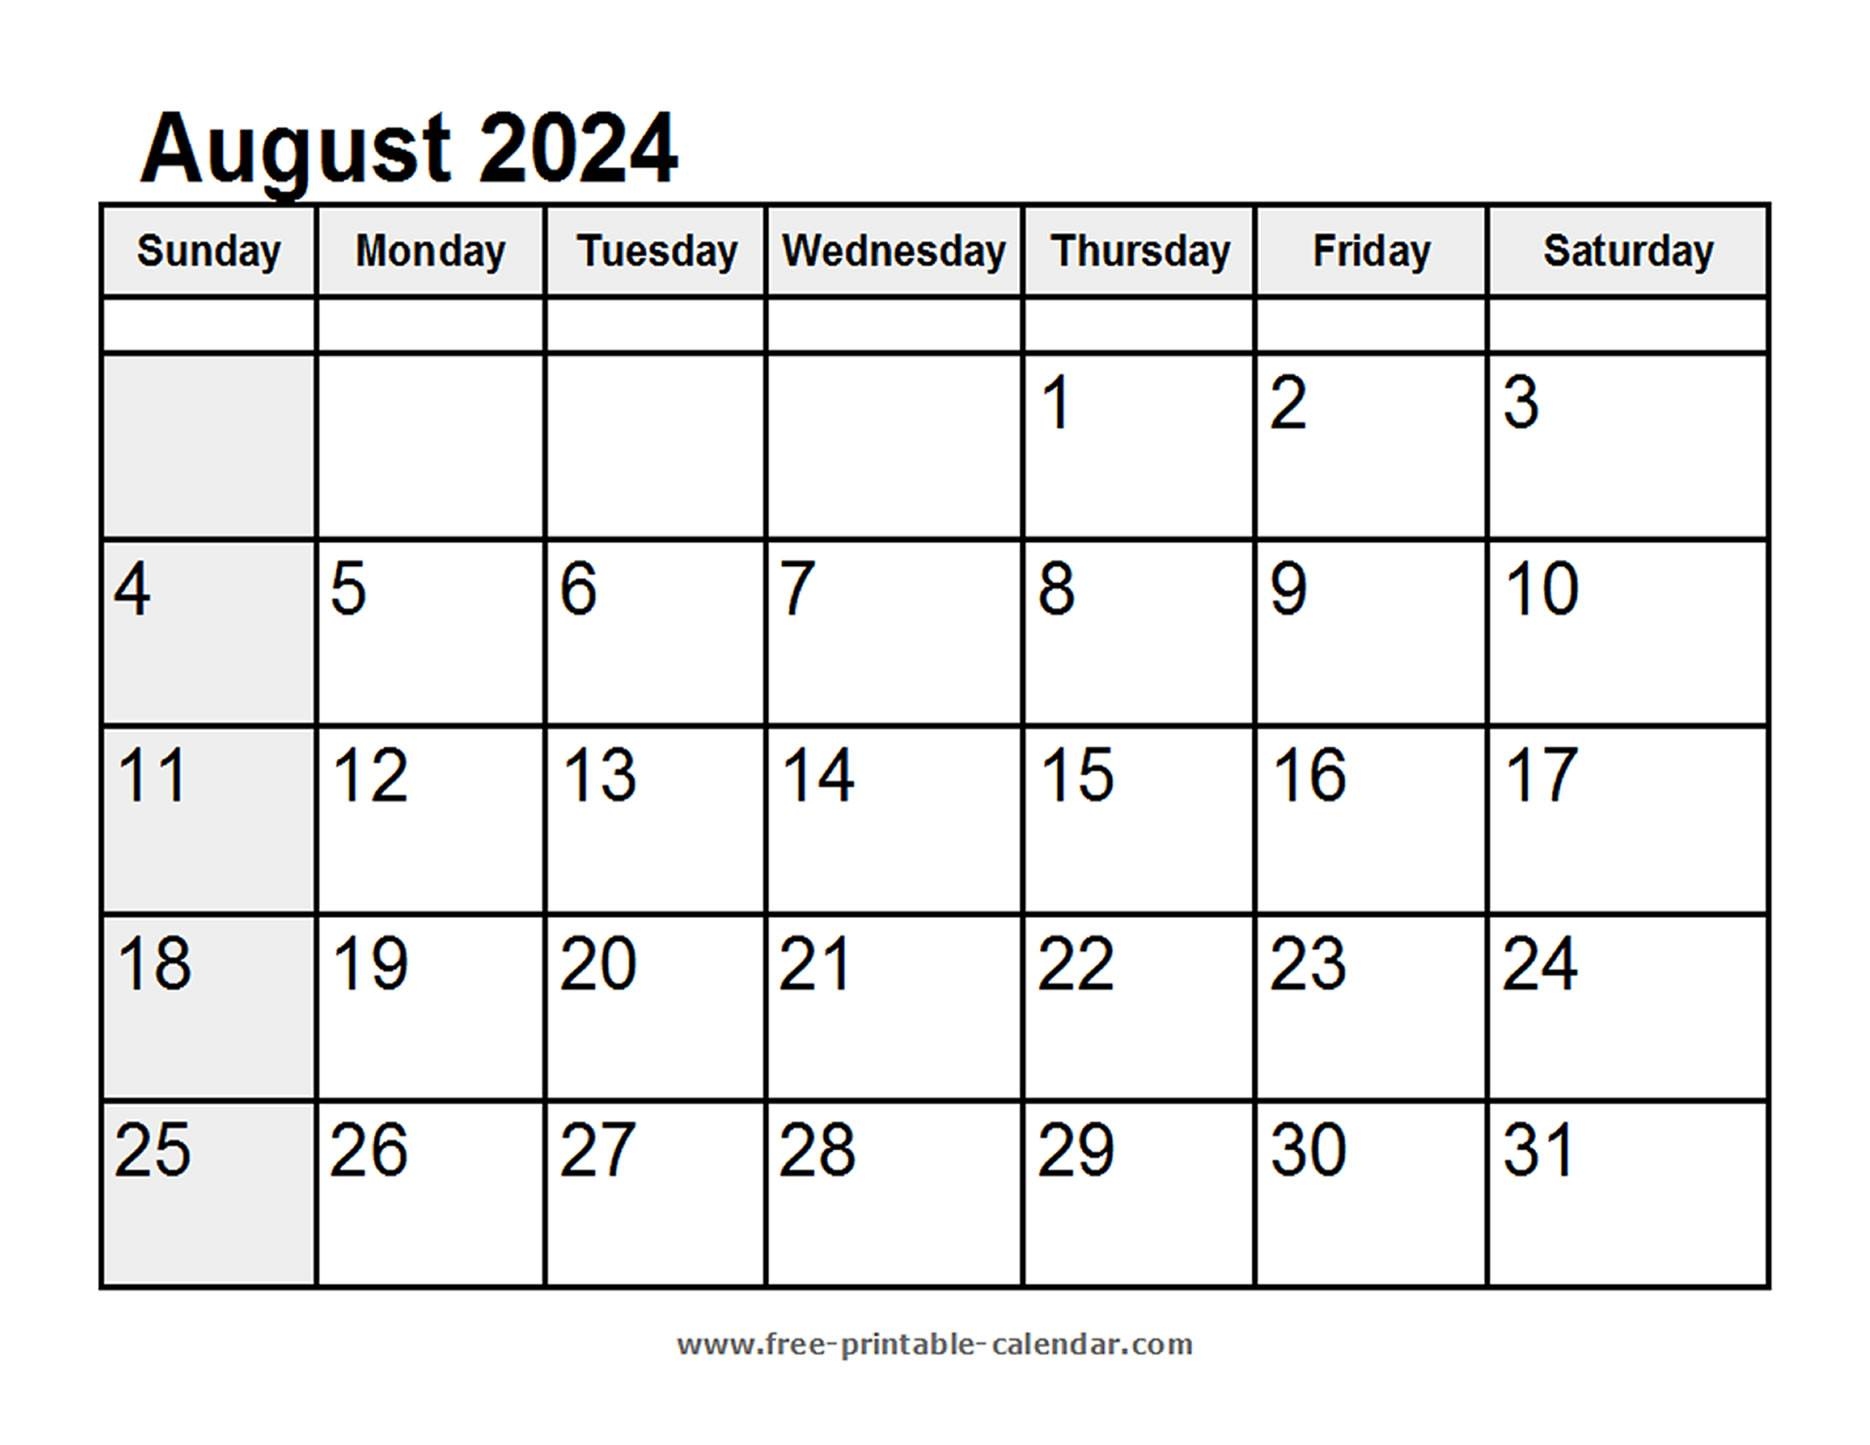 Calendar August 2024 - Free-Printable-Calendar throughout Free Printable August 2024 Calendar Canada